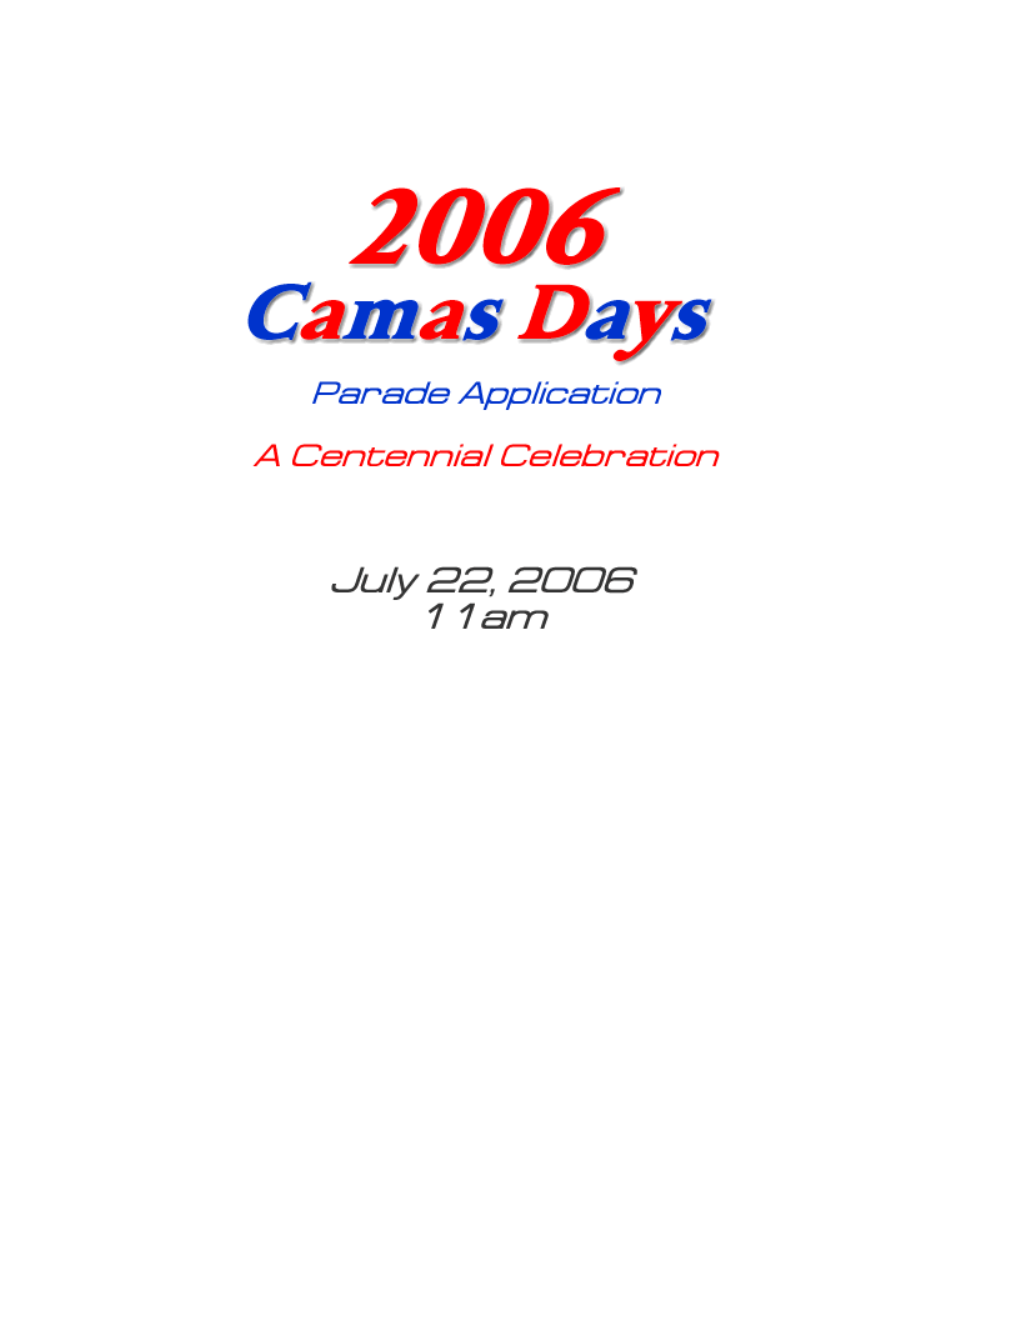 Camas Days 1998 Parade - Saturday, July 25 - 11:00 Am